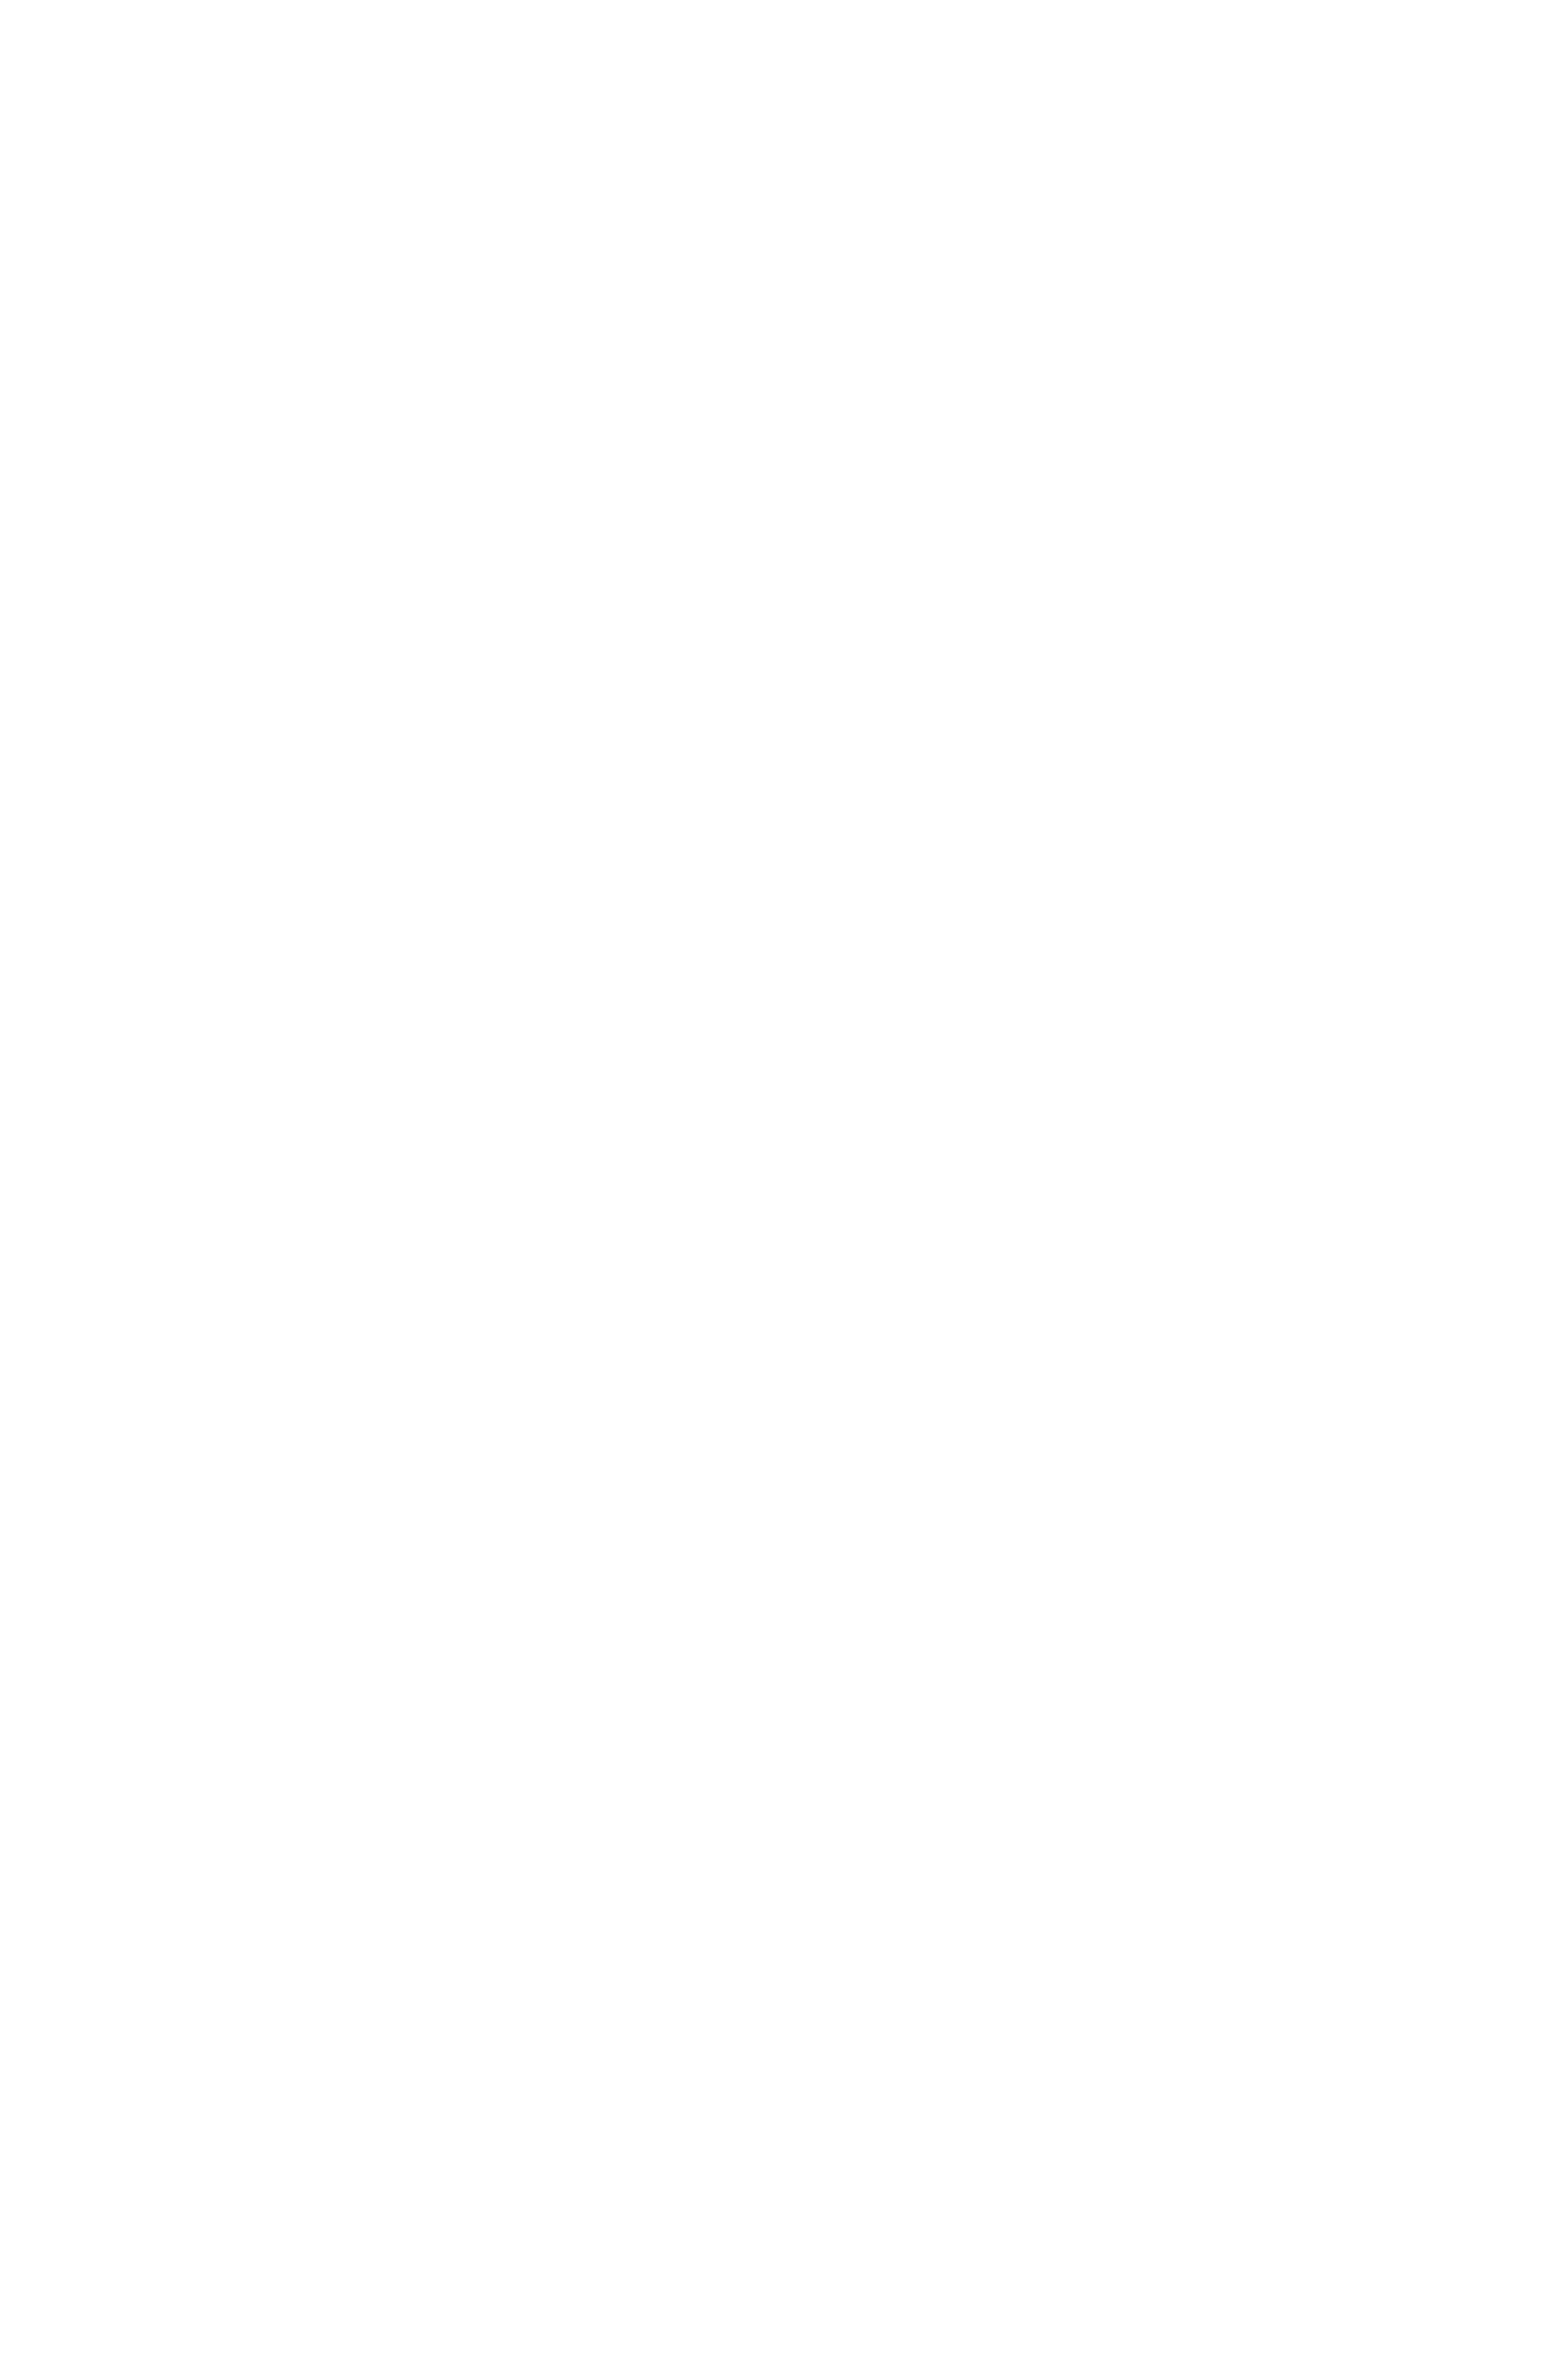 Hylla Vita. 5 ekhyllplan med ram i svart.